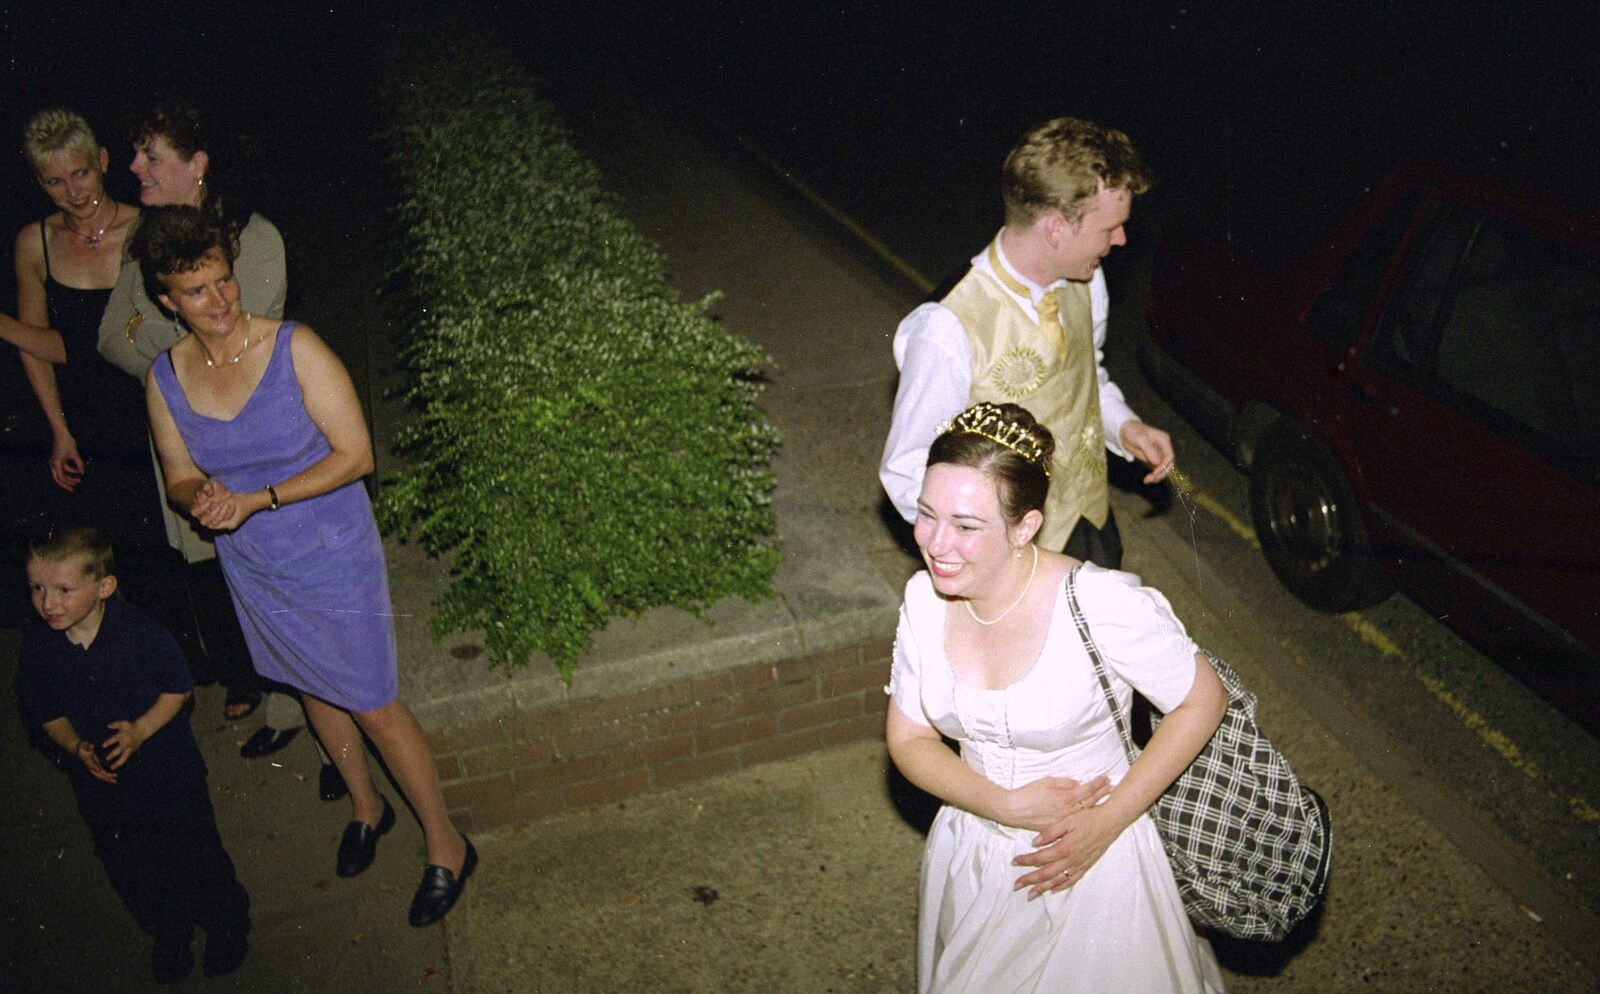 Lesley and Joe outside the Social Club from Joe and Lesley's CISU Wedding, Ipswich, Suffolk - 30th July 1998